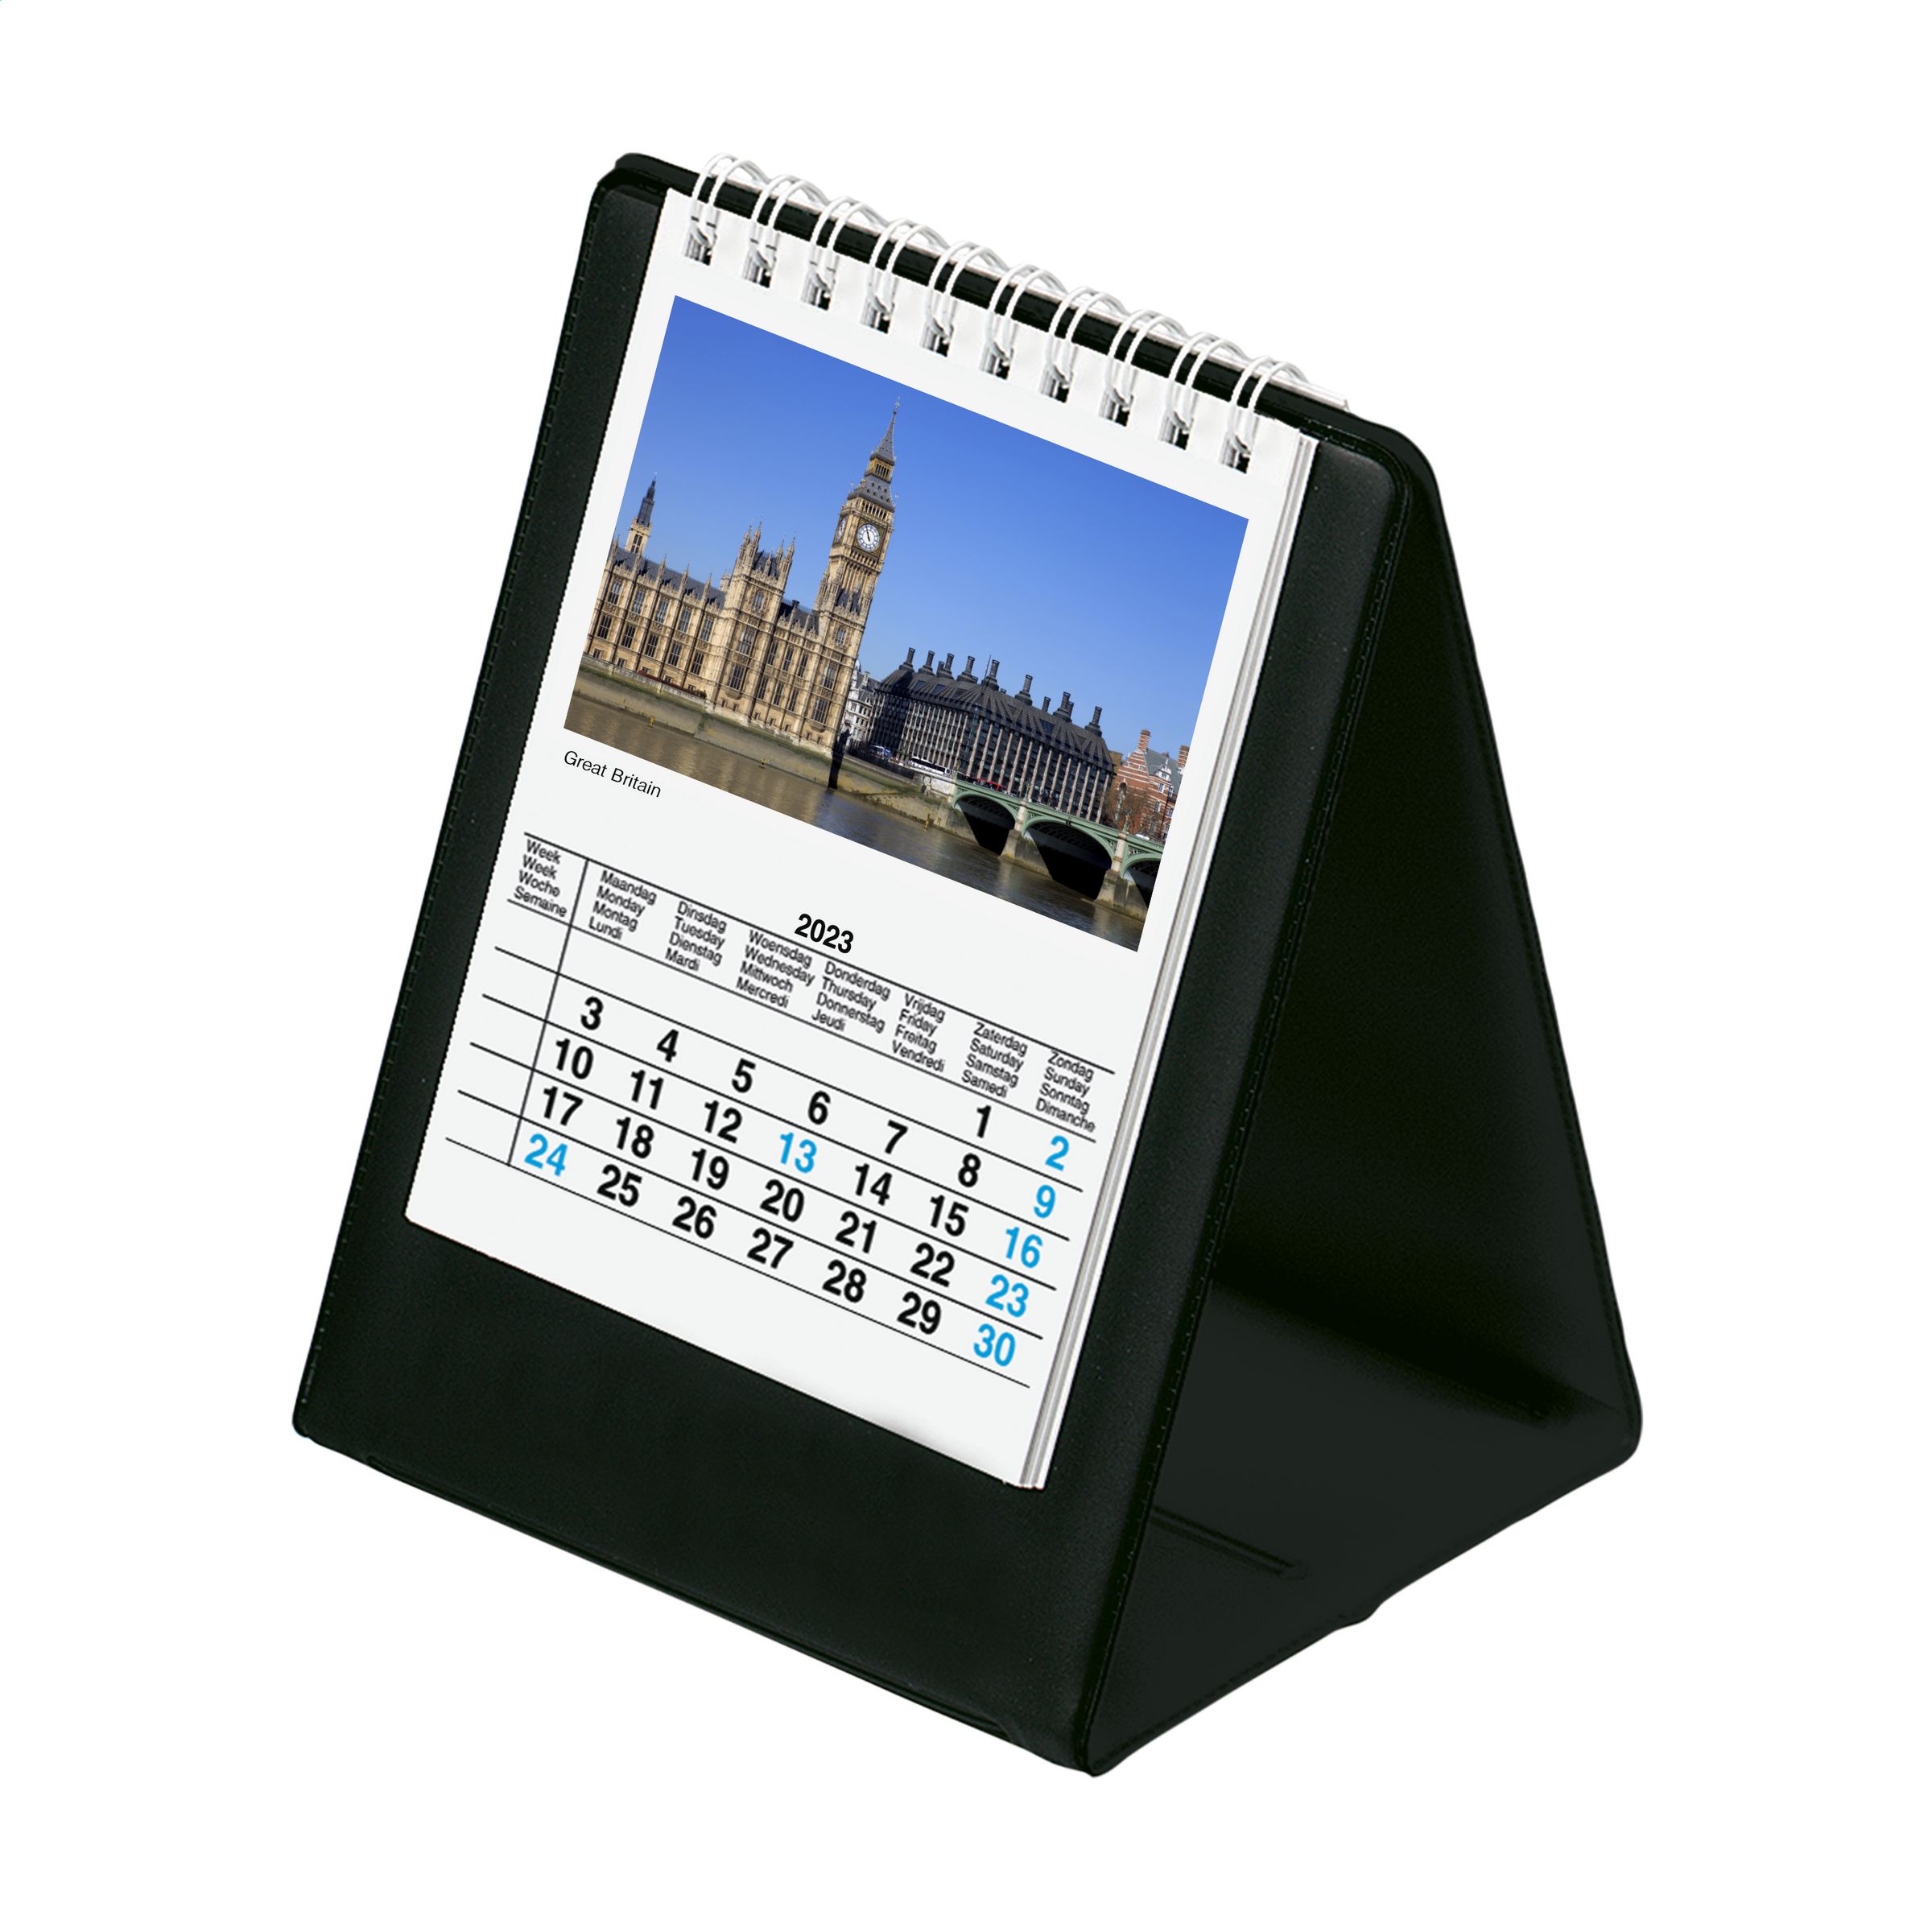 A desk calendar in multiple European languages - Chettle - Parley